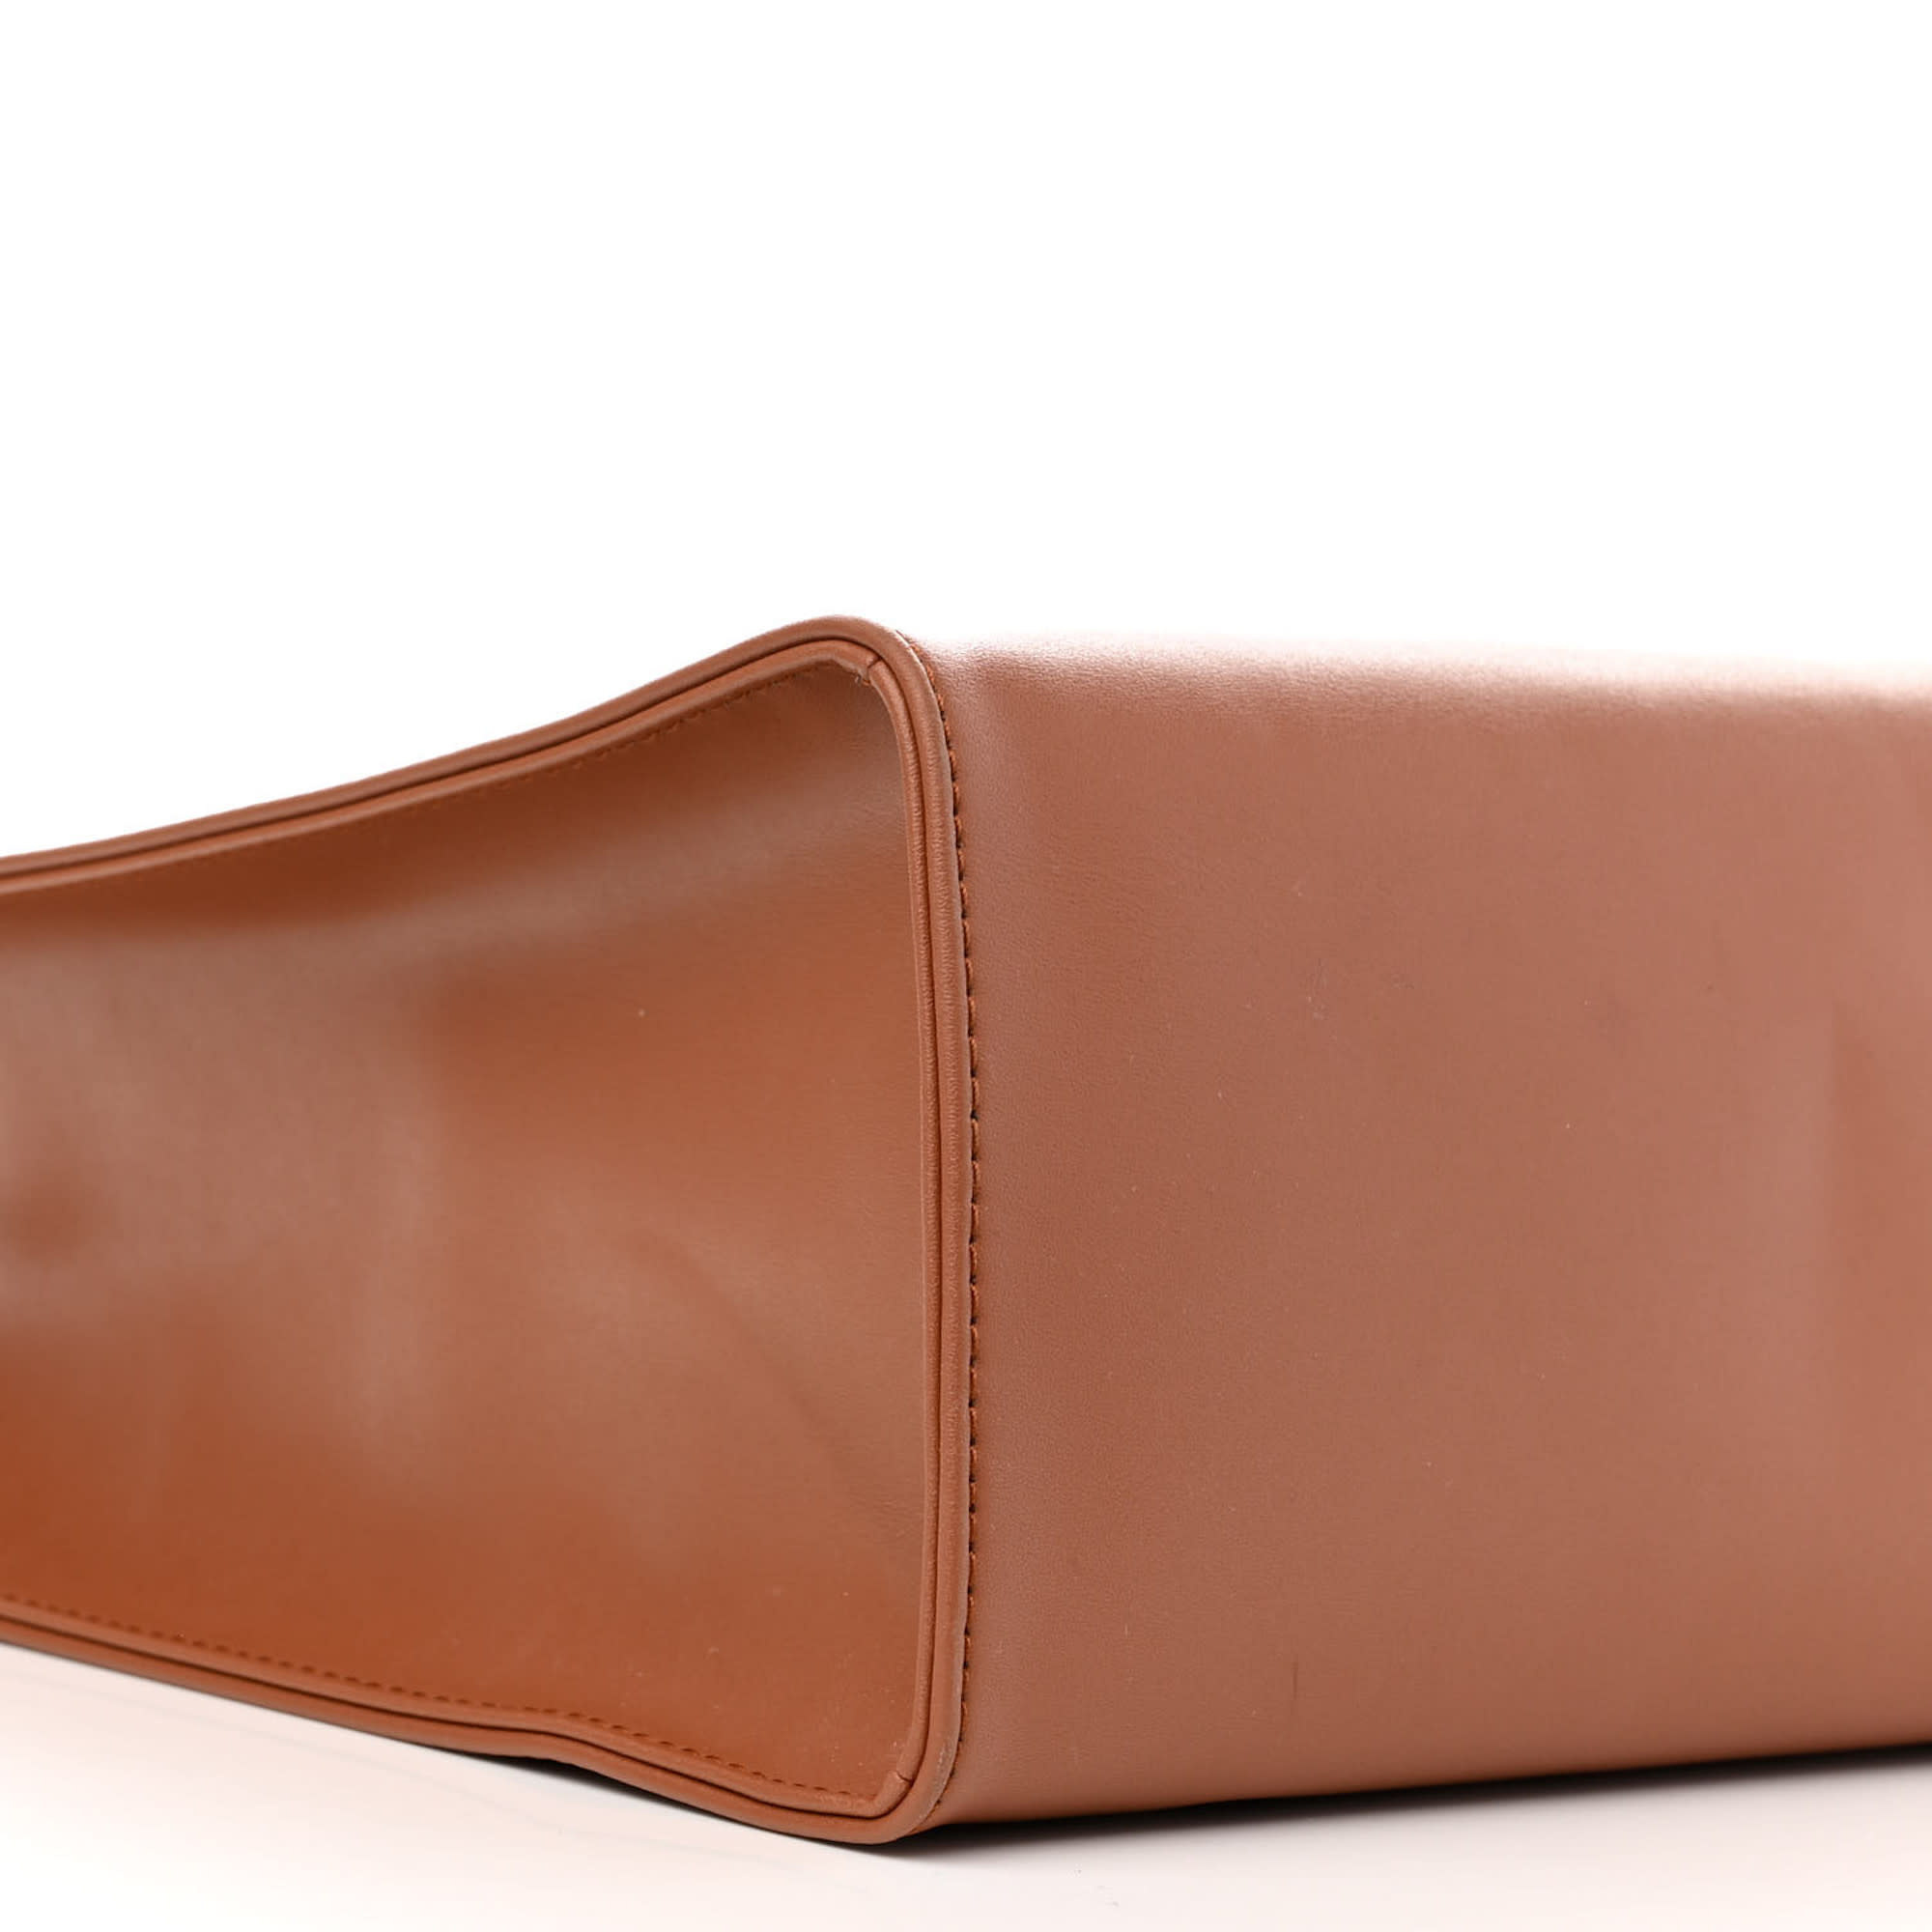 Telfar Cream Shopping Bag Size MEDIUM M TF-012-CR-M 100% Authentic BRAND NEW